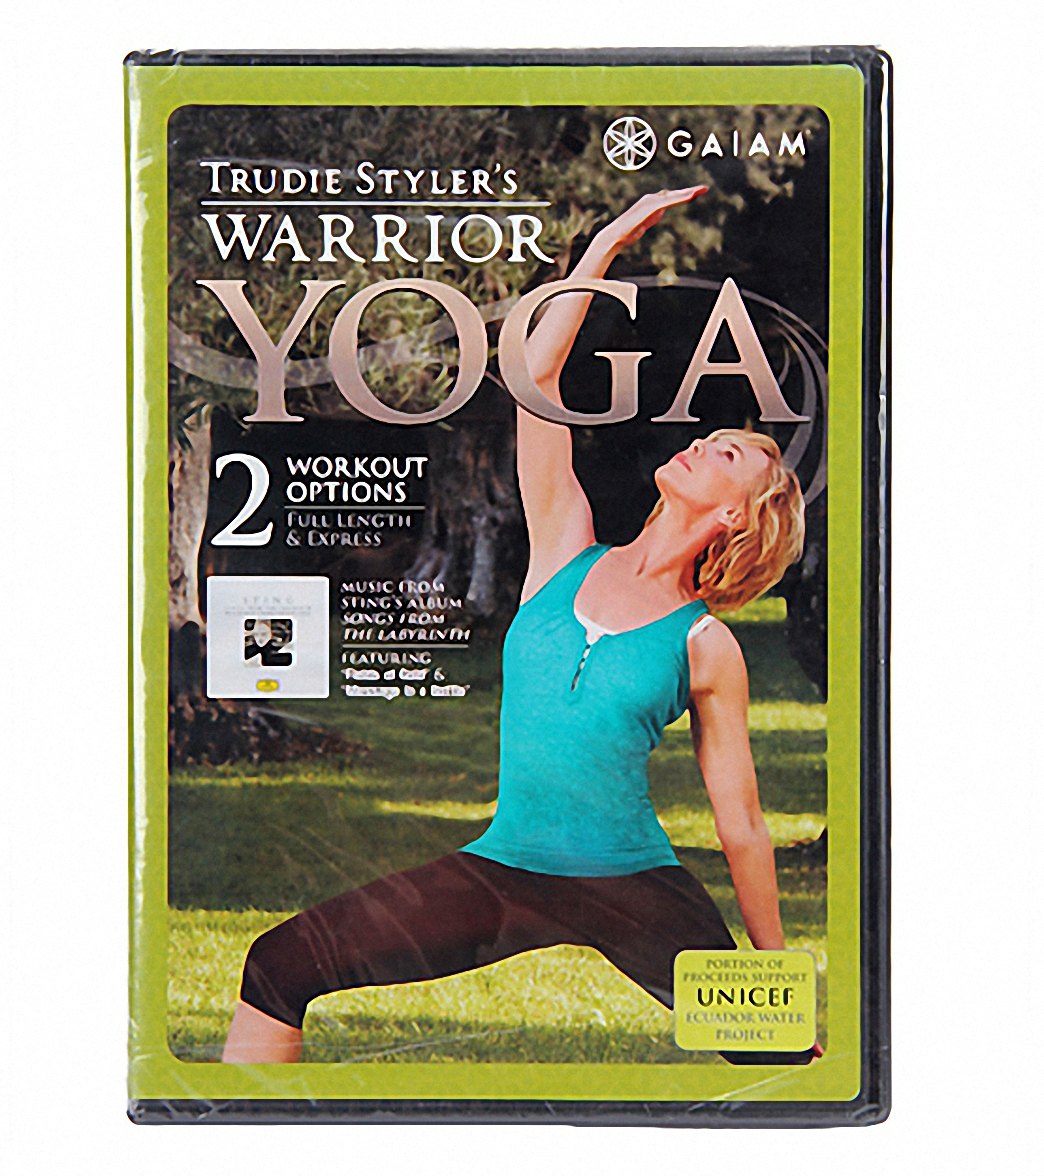 Gaiam Trudie Styler's Warrior Yoga DVD